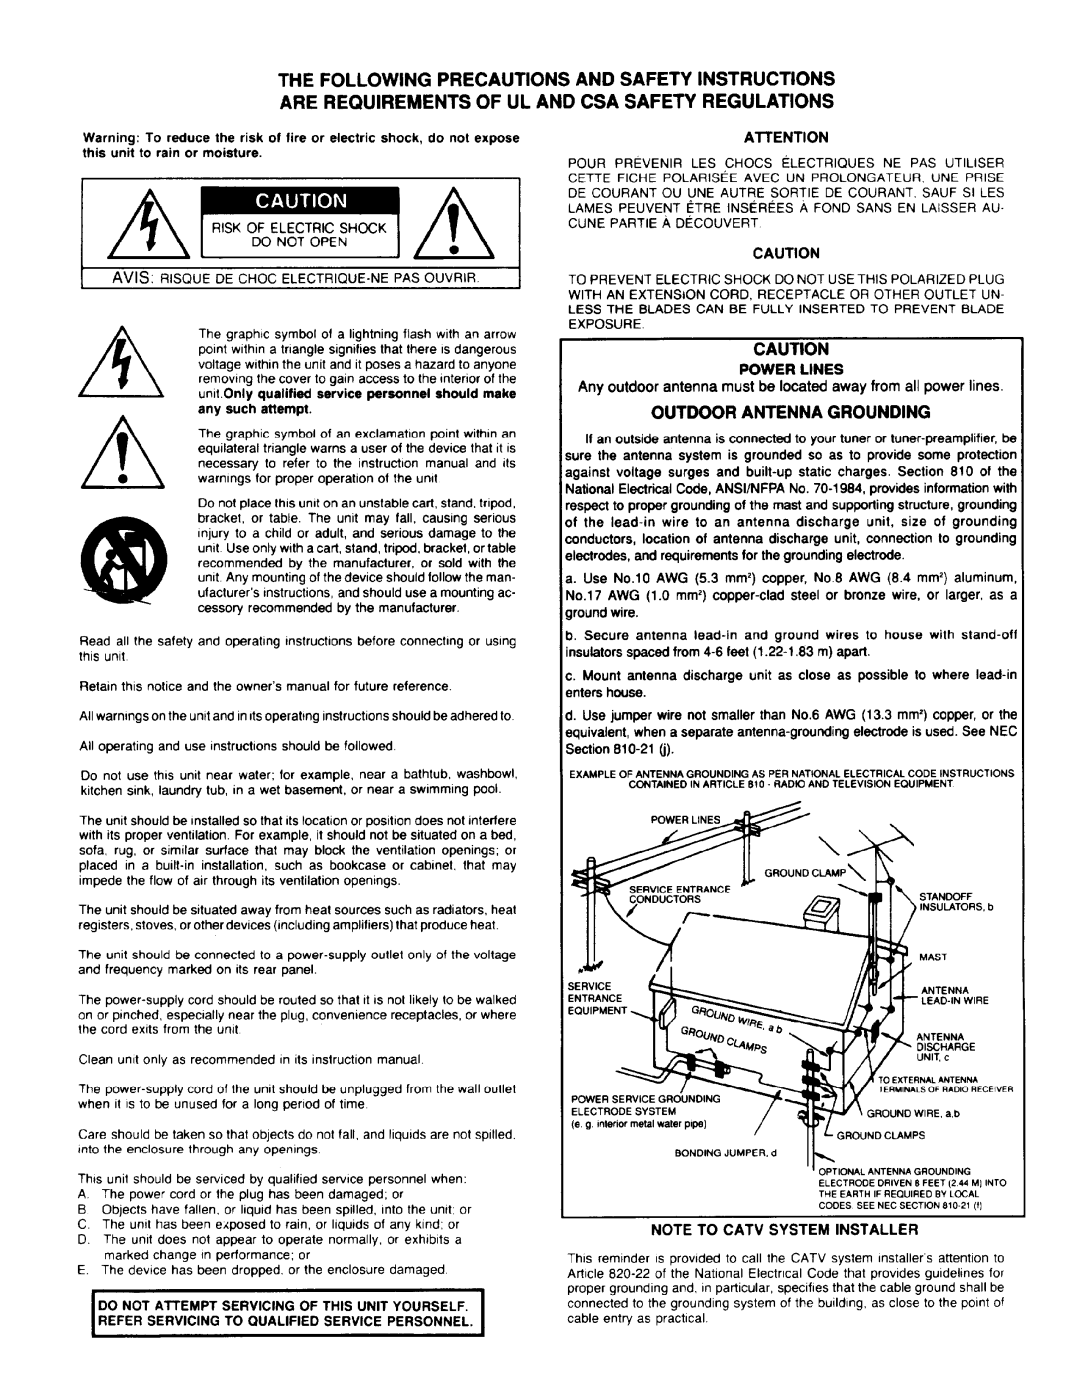 Adcom GFA-5400 manual 